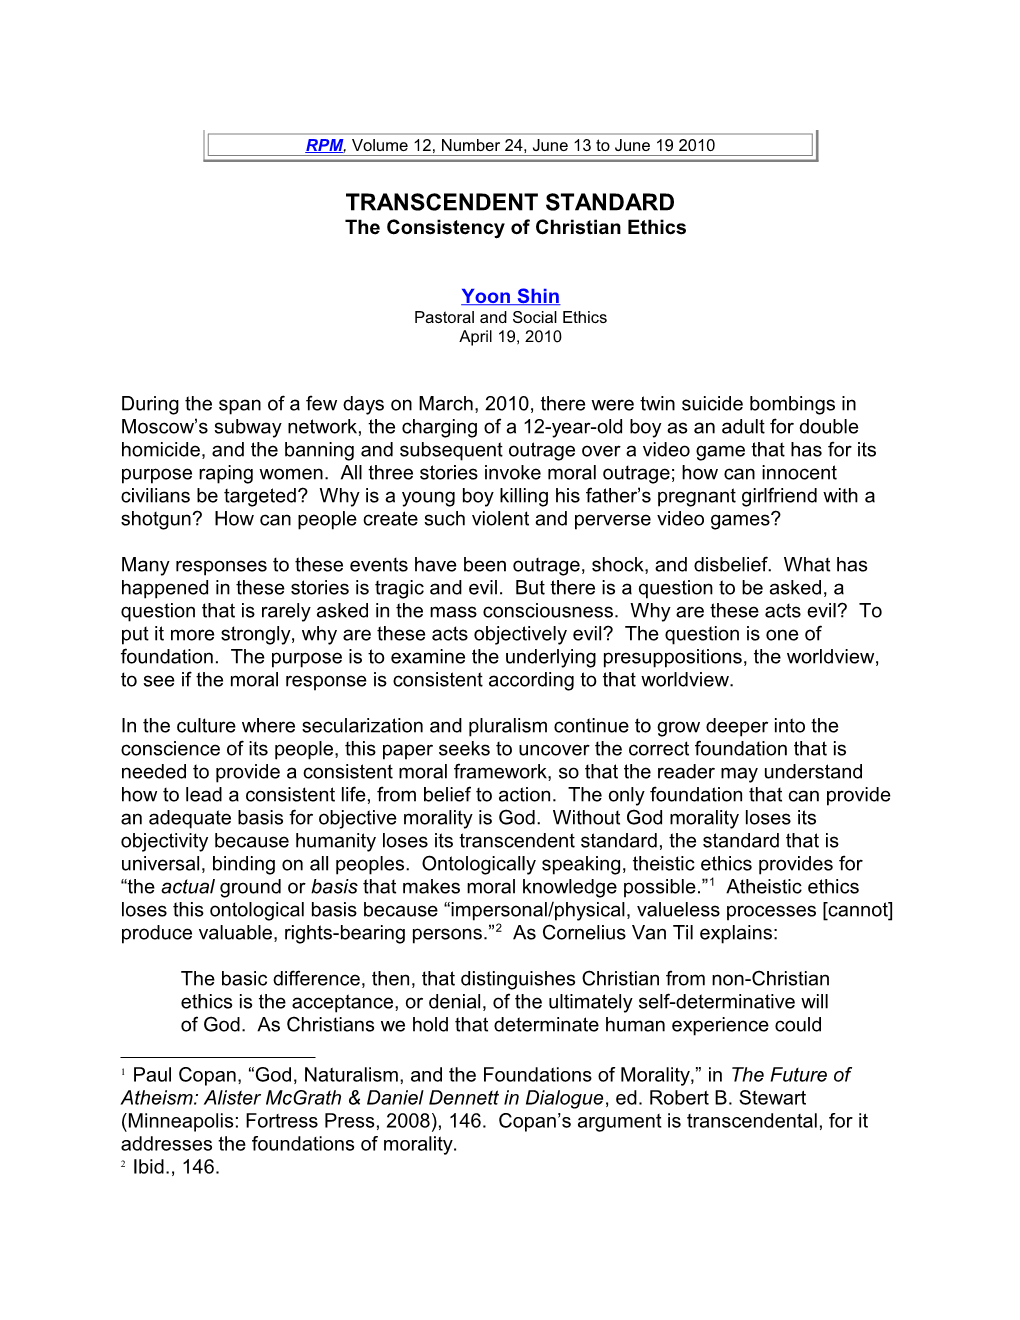 Transcendent Standard: the Consistency of Christian Ethics